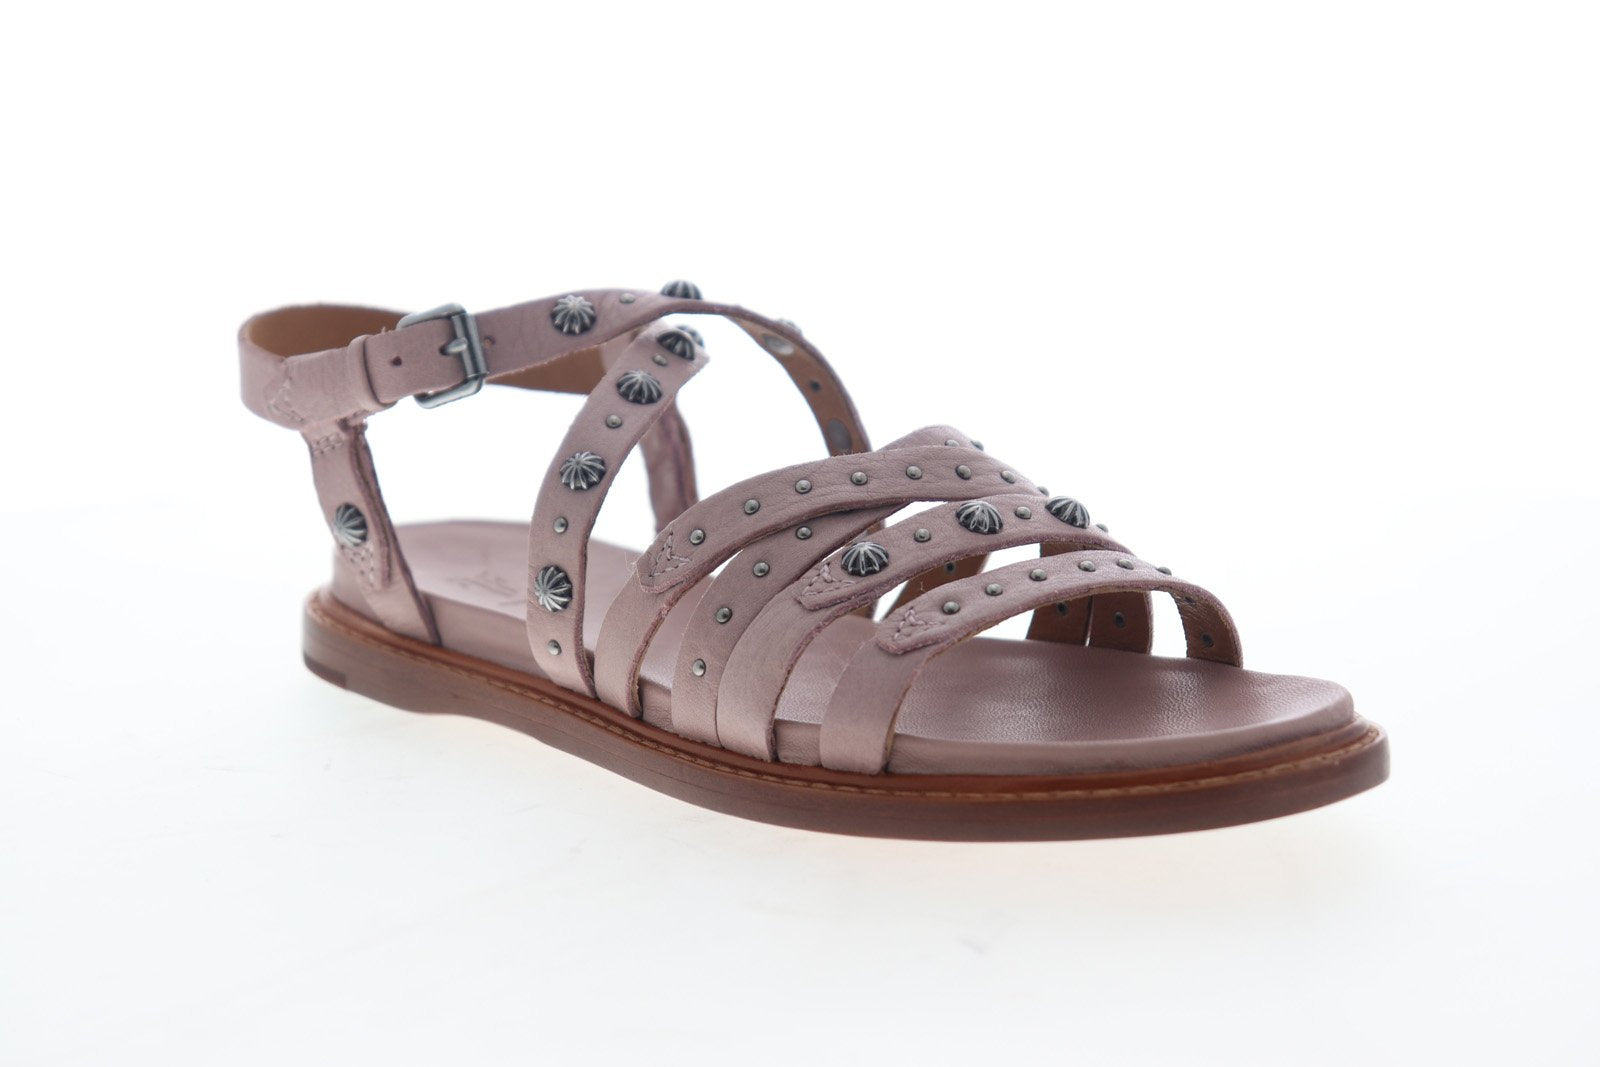 frye strappy sandals